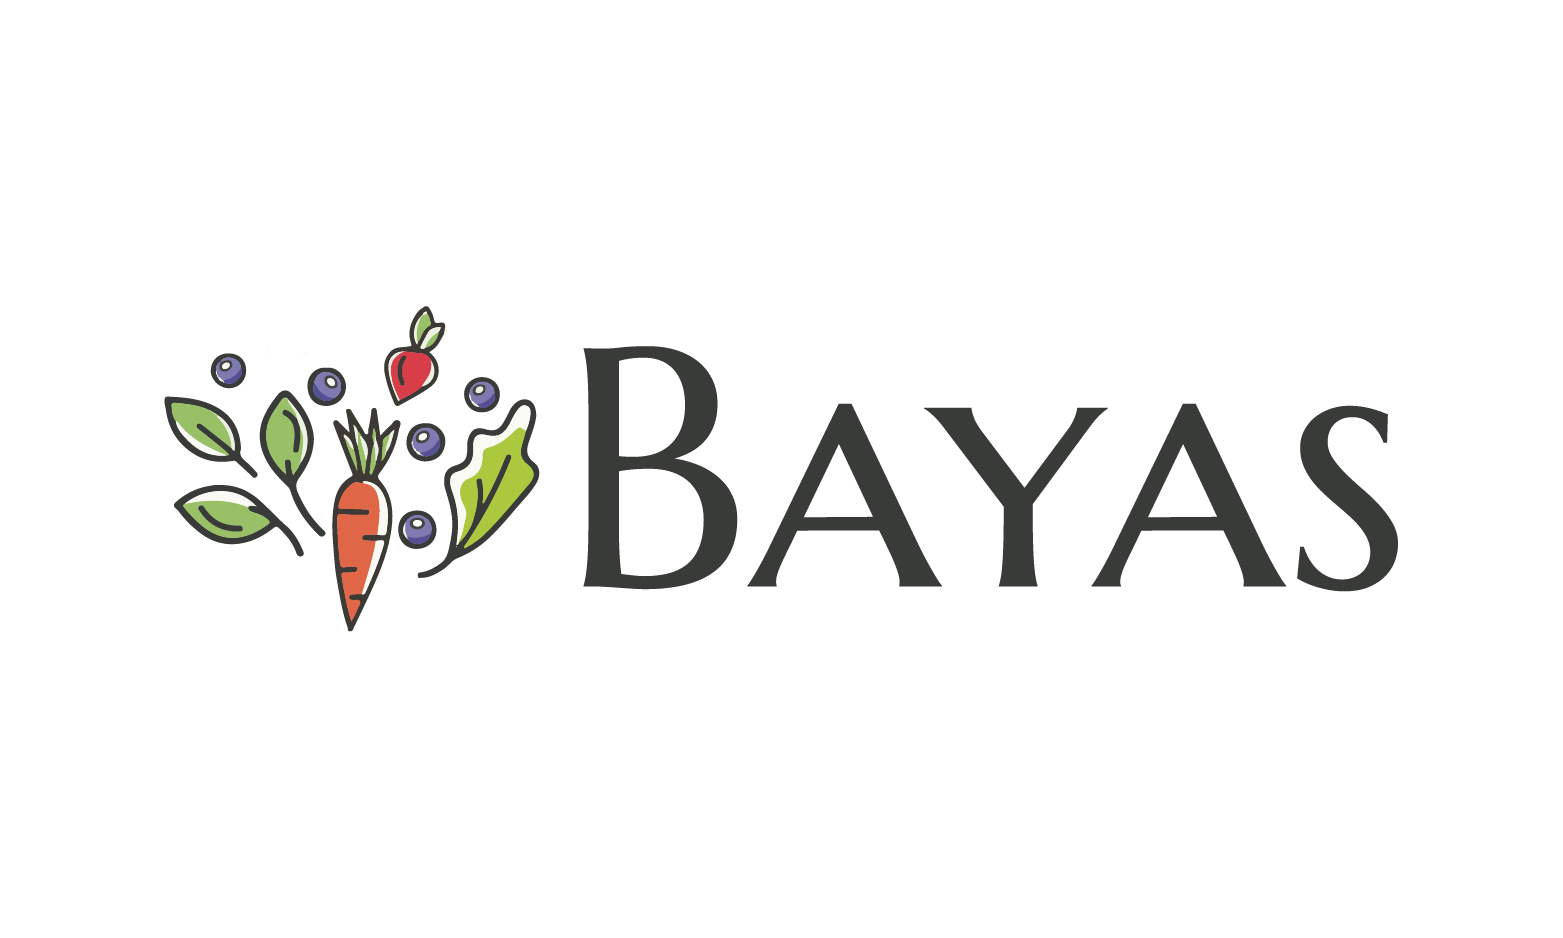 Bayas.com - Creative brandable domain for sale